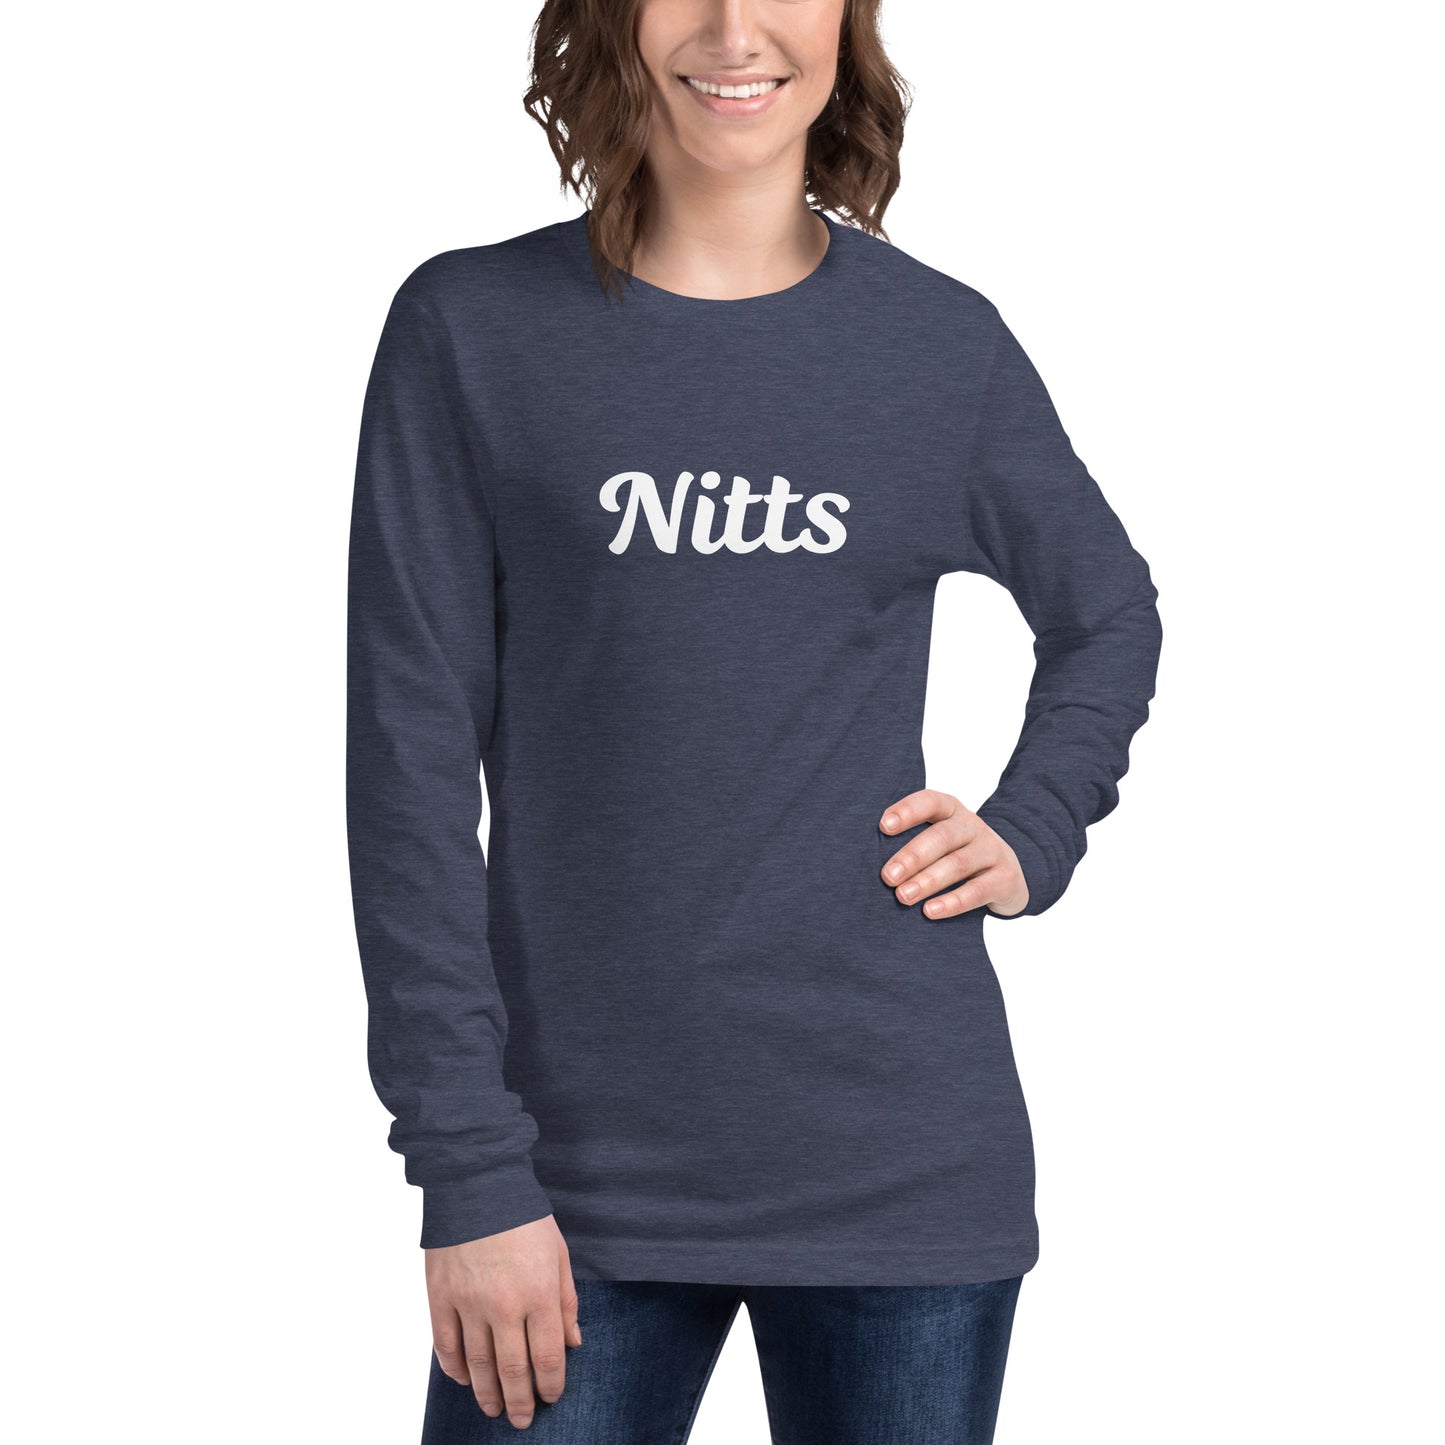 Nitts Classic unisex long sleeve tee - navy heather